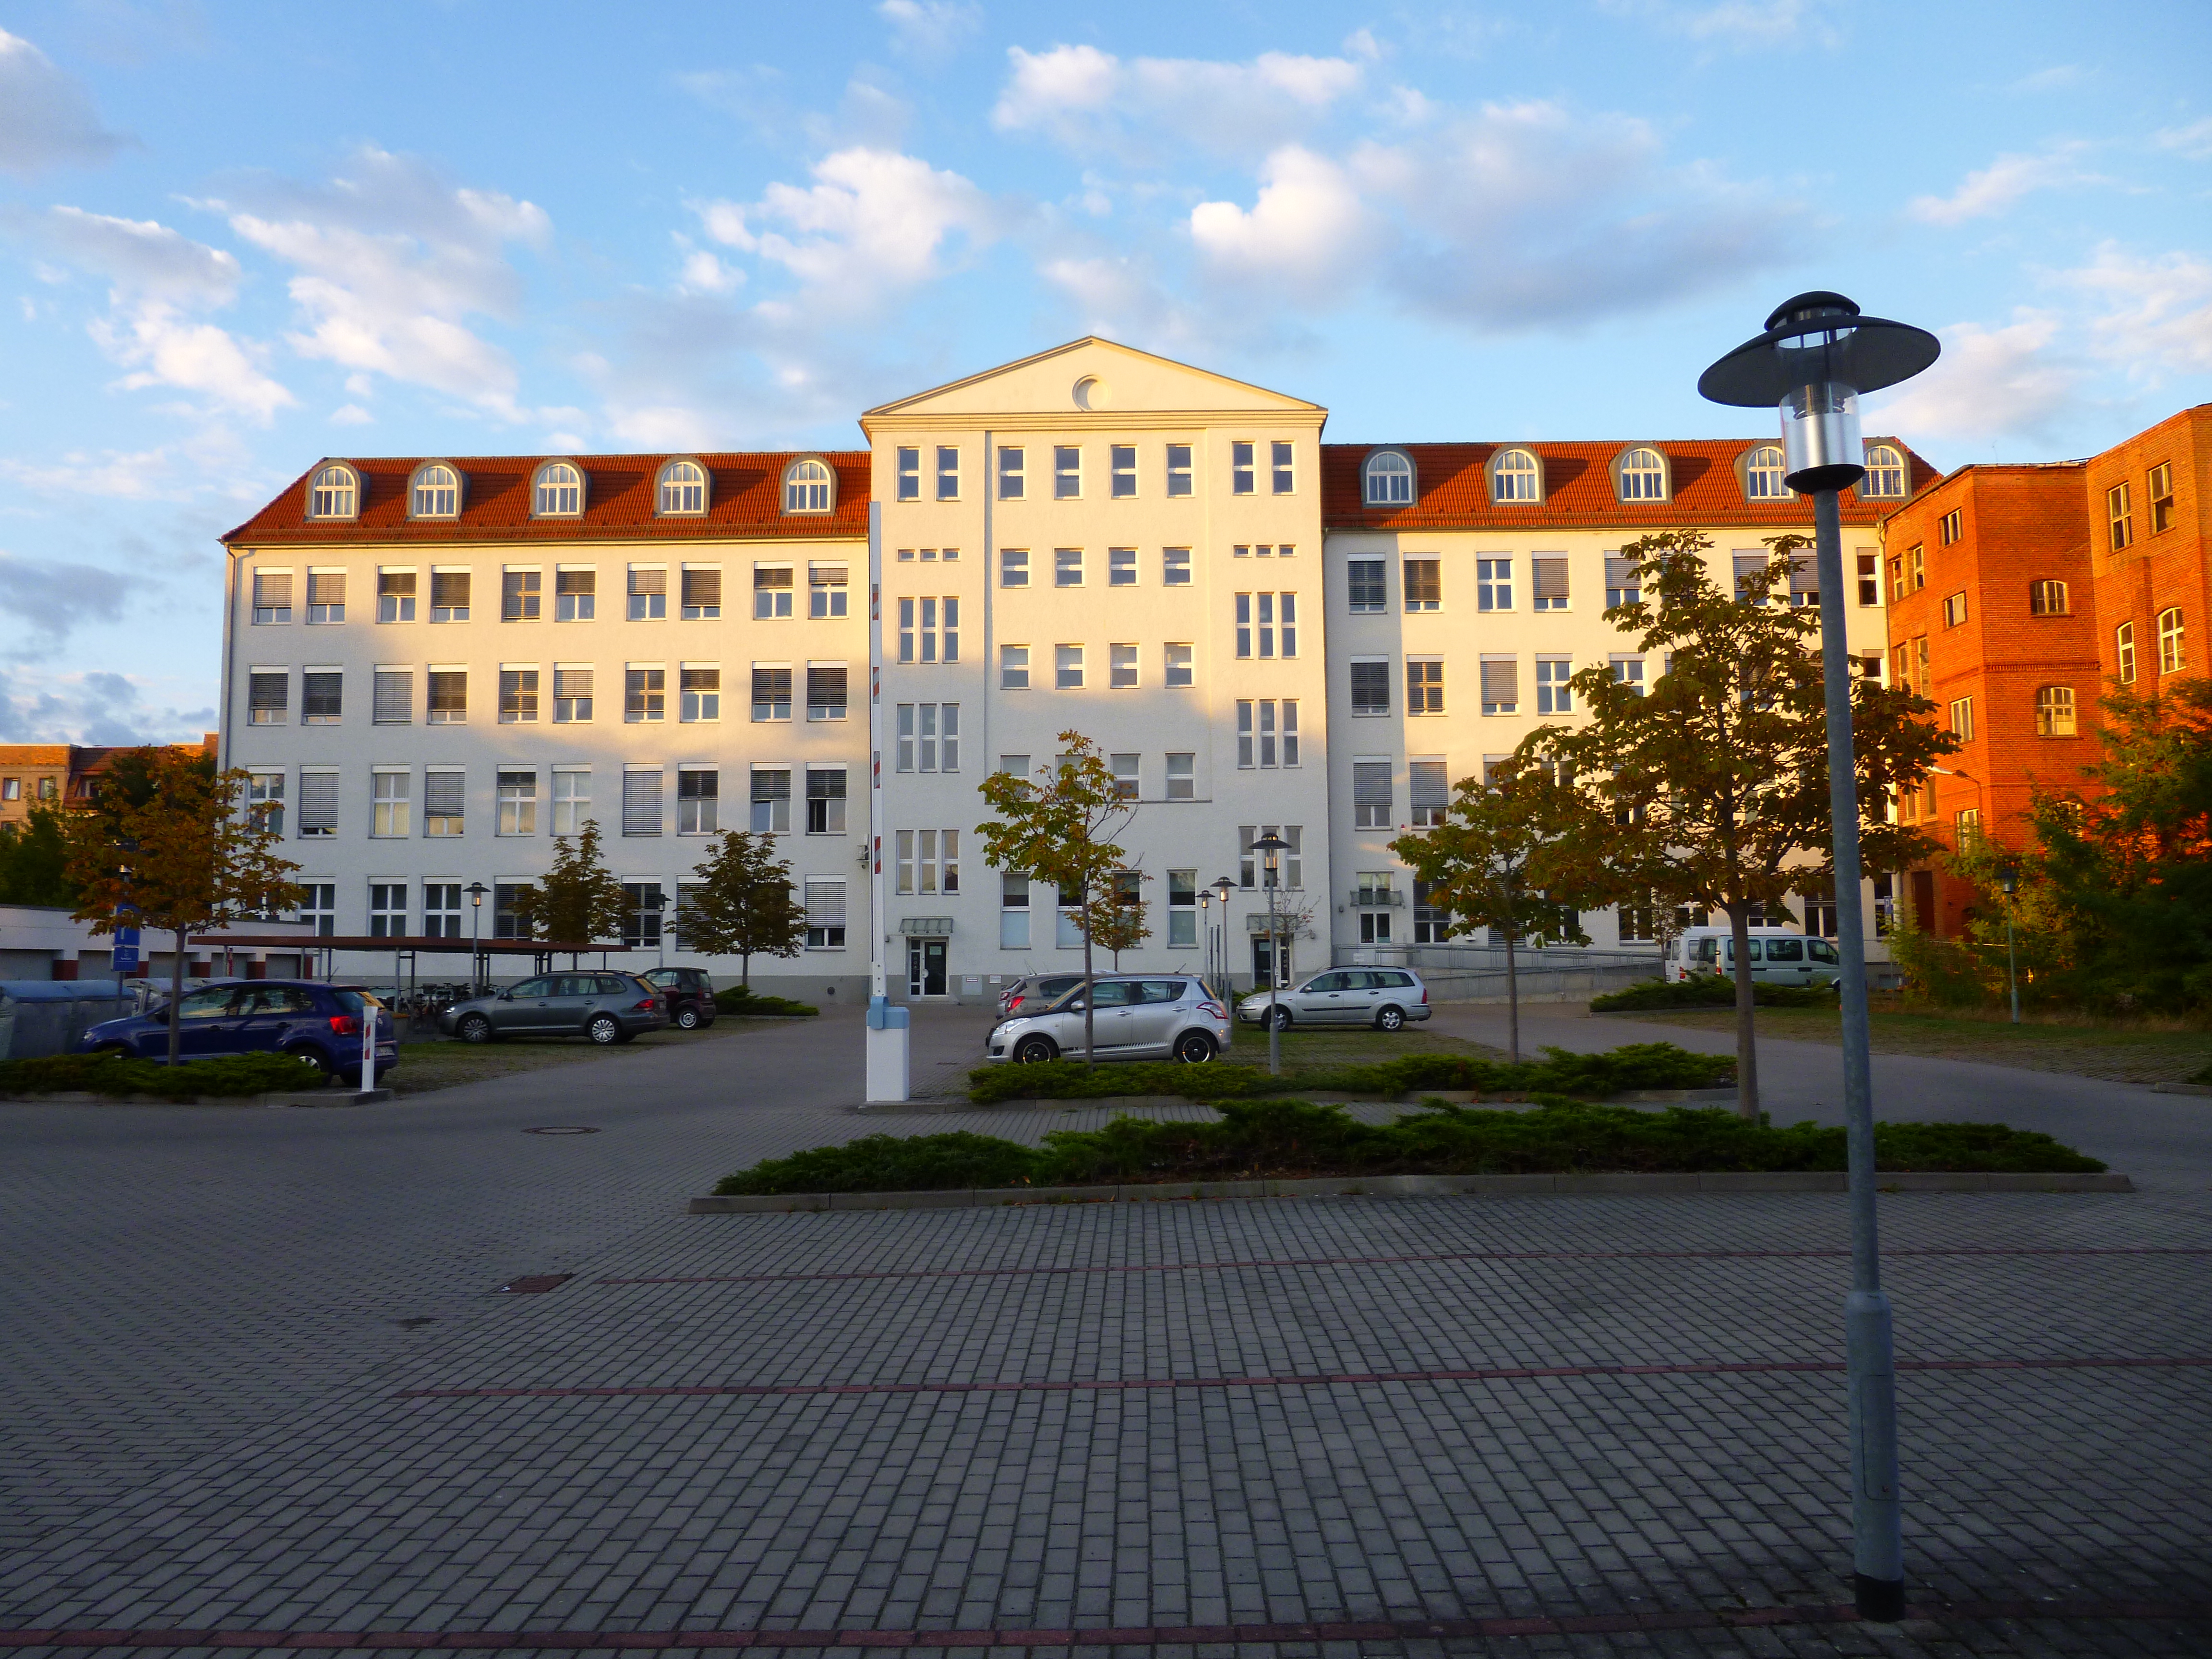 Image/Rathenow-Rathaus-Hof